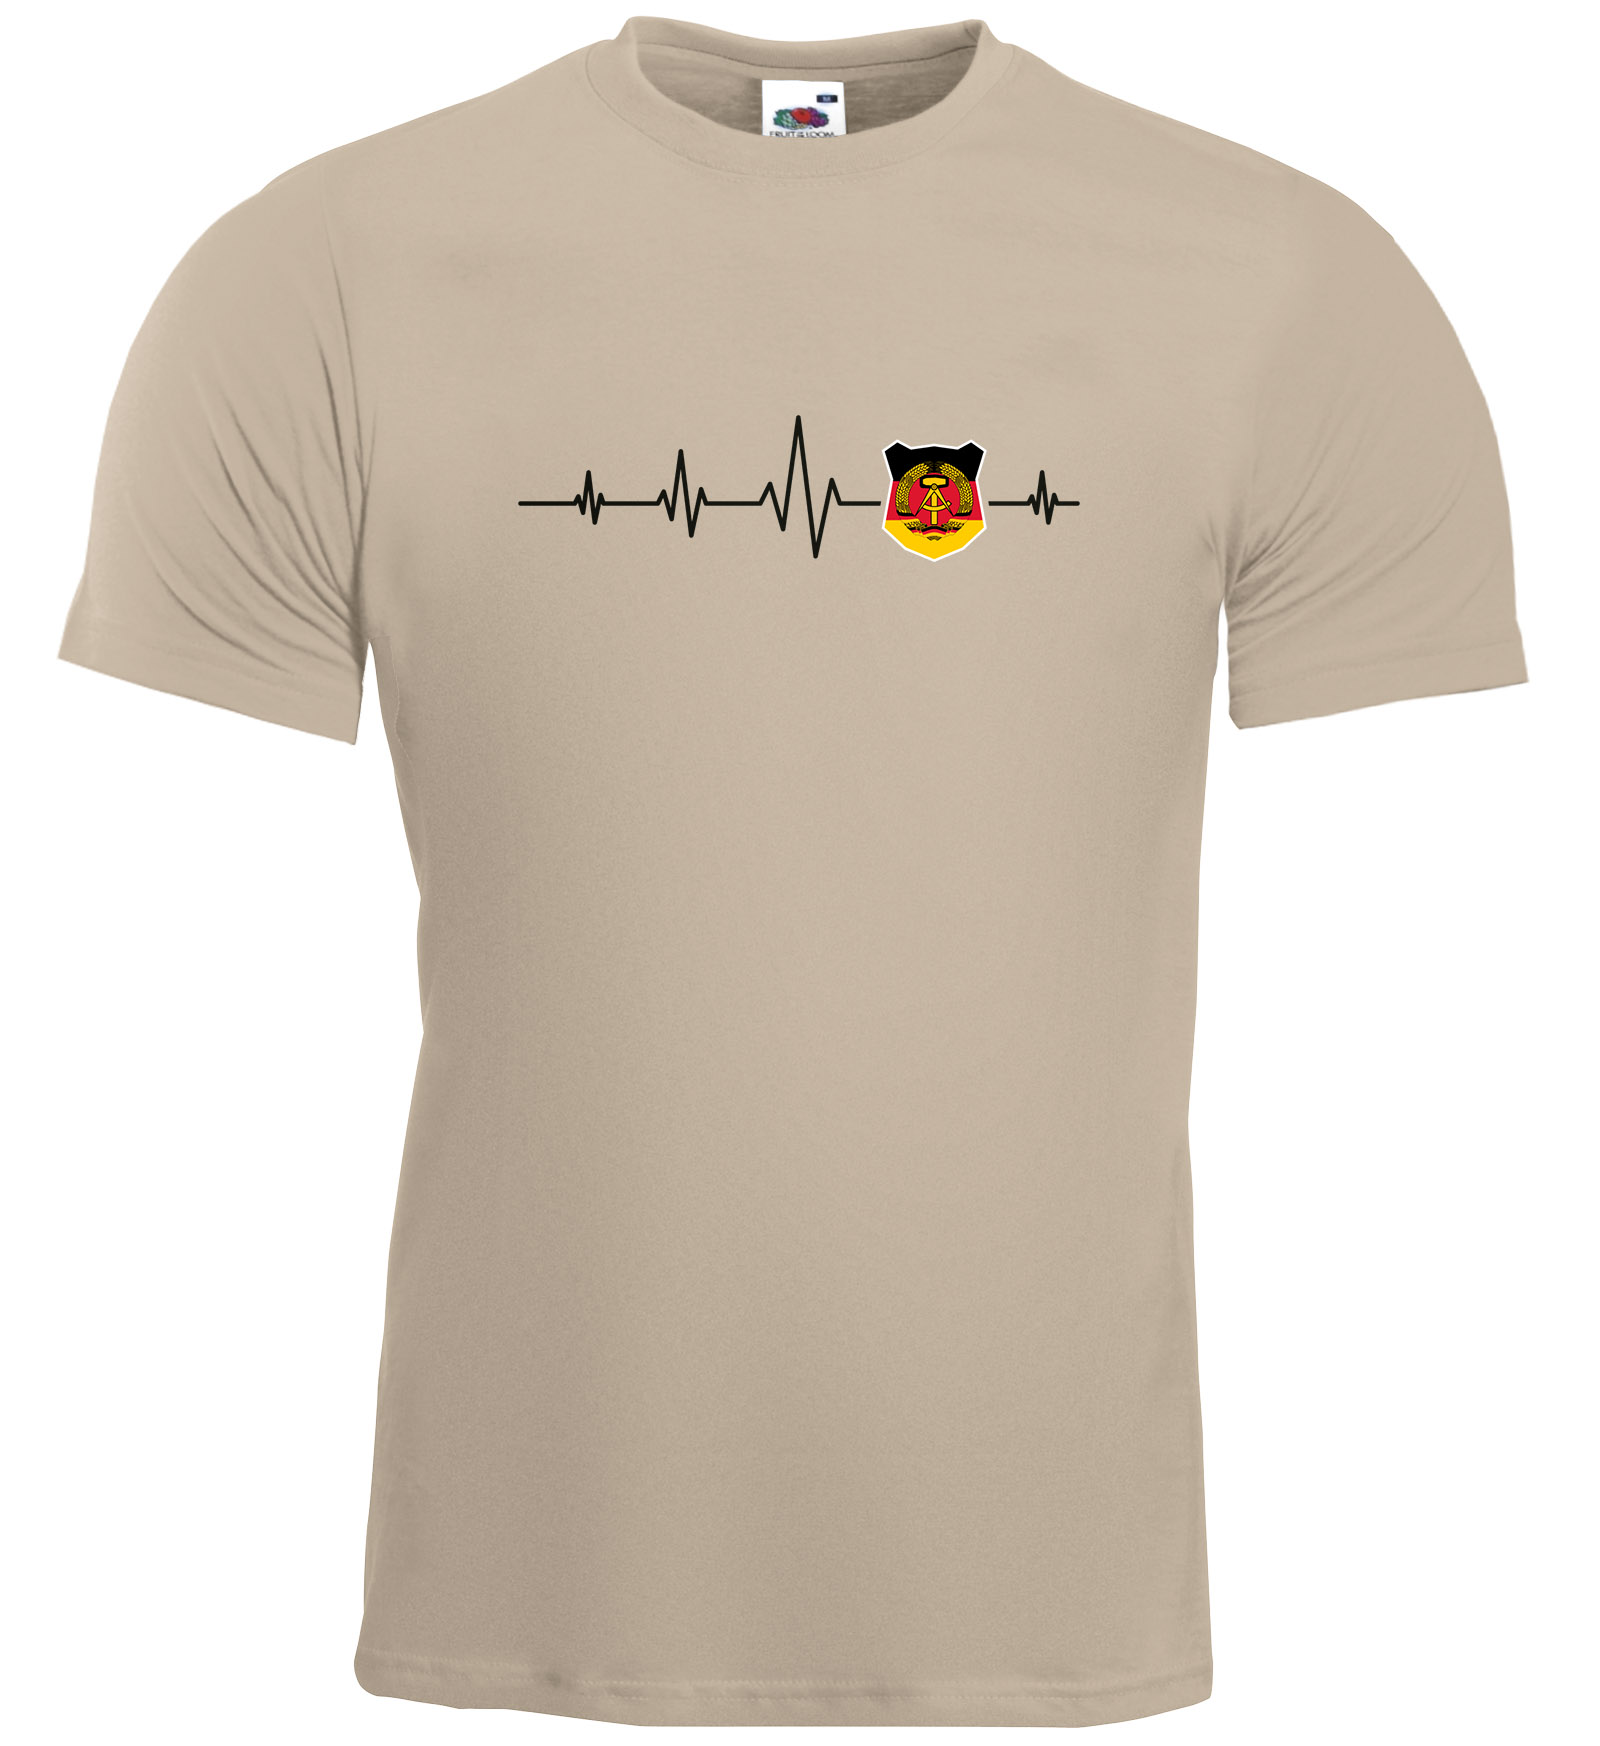 Ddr Herzschlag T Shirt Herz Puls Nation Funshirt Ebay